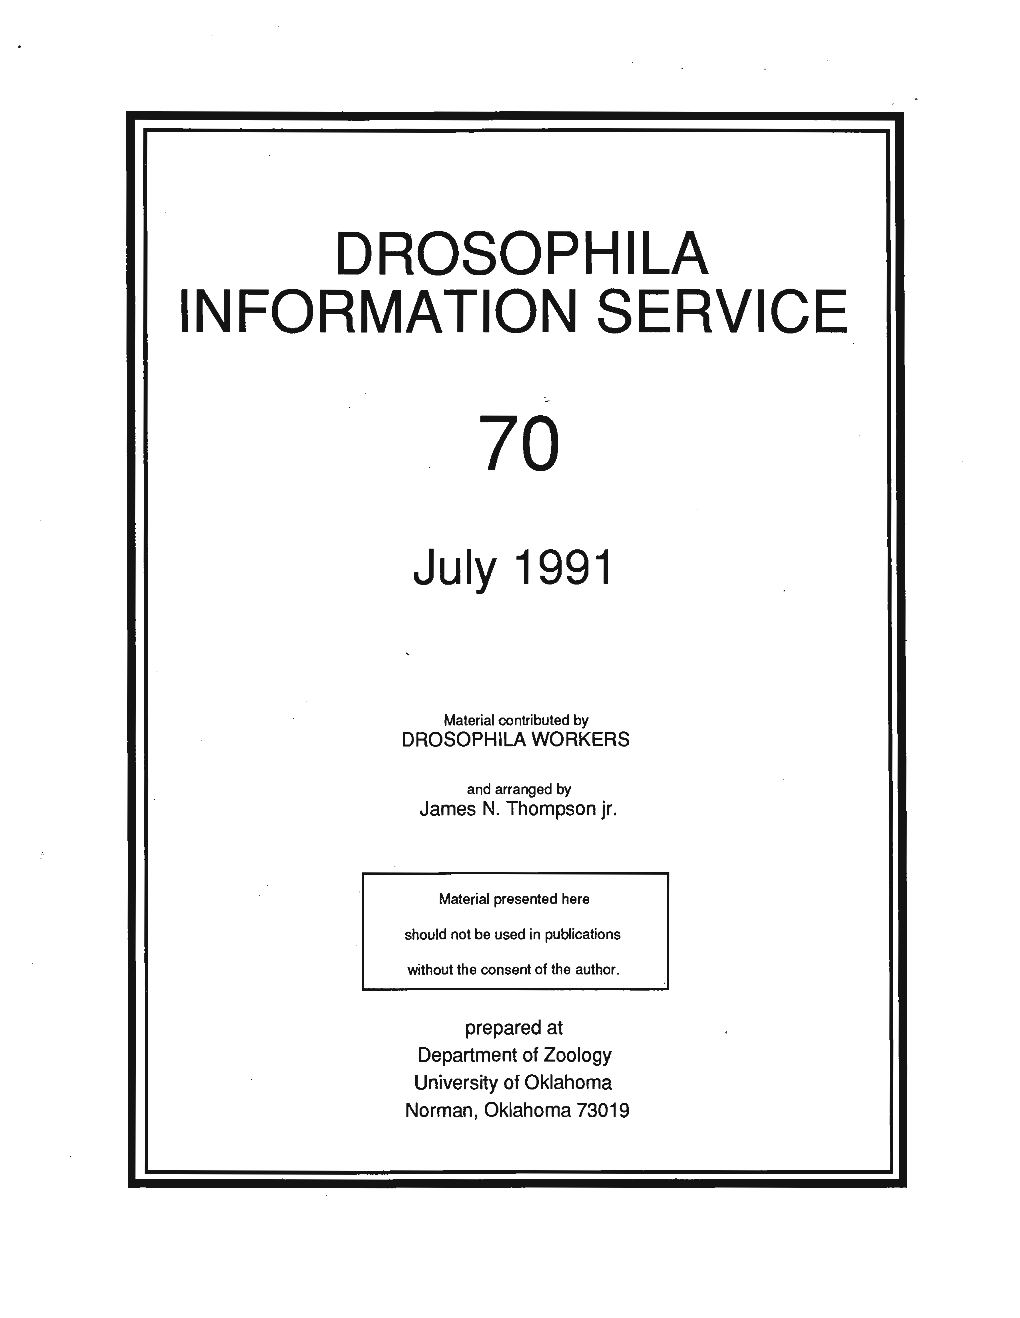 Drosophila Information Service 70